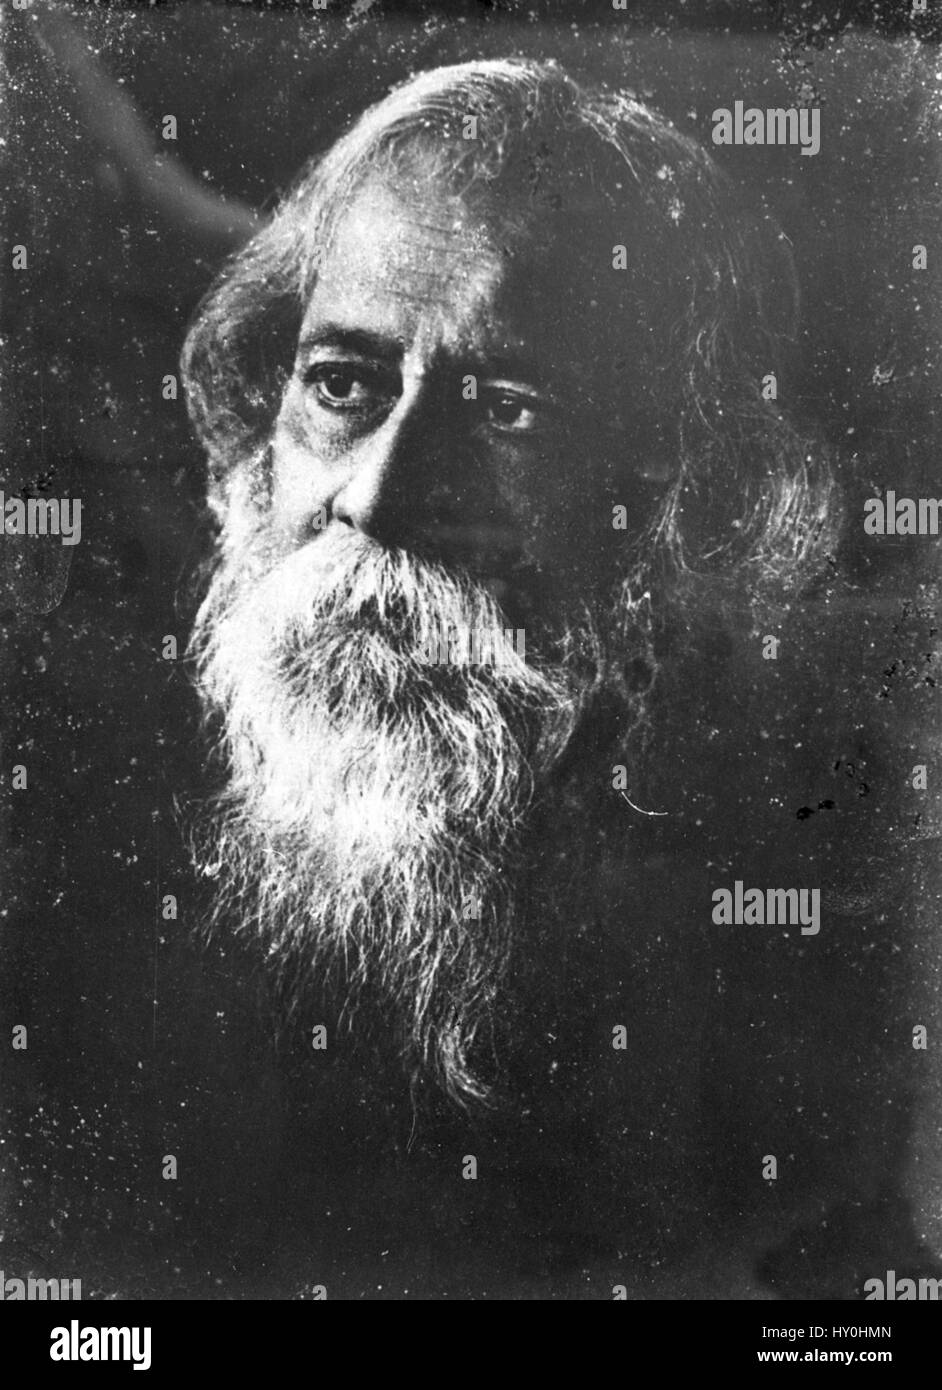 Indian poet, rabindranath tagore, india, asia, 1935 Stock Photo